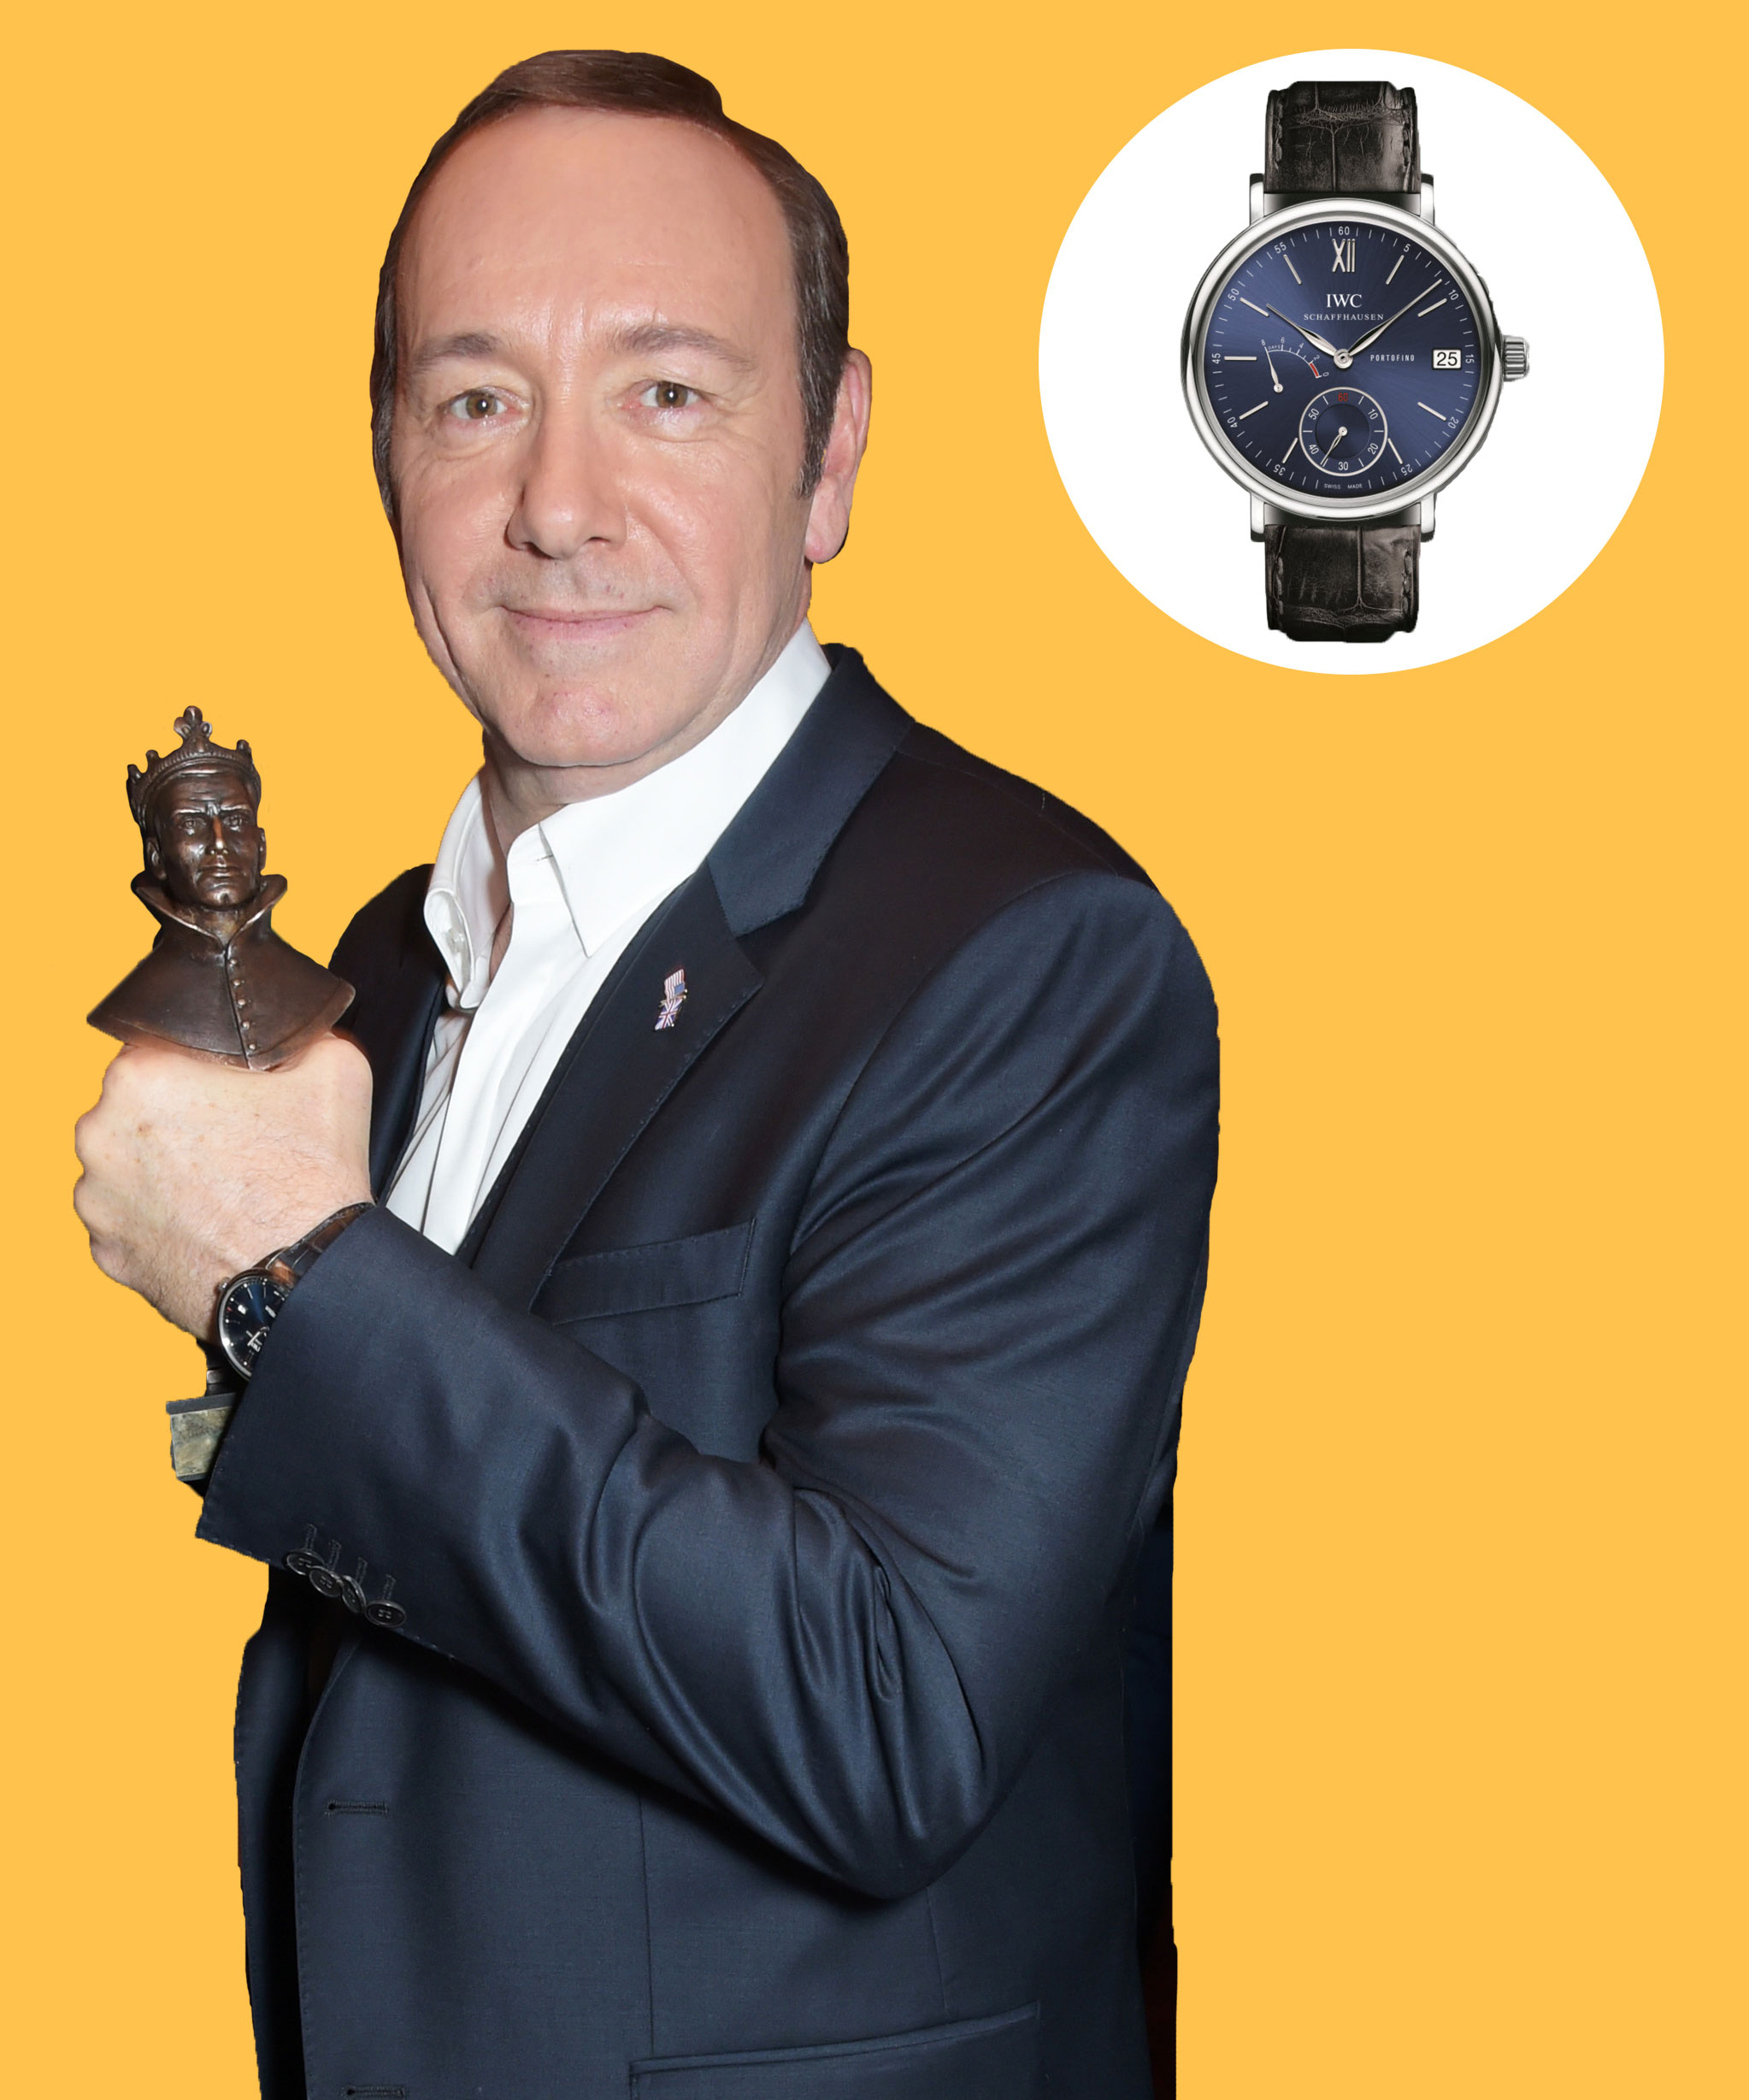 Celebrities Wearing IWC Watches, News